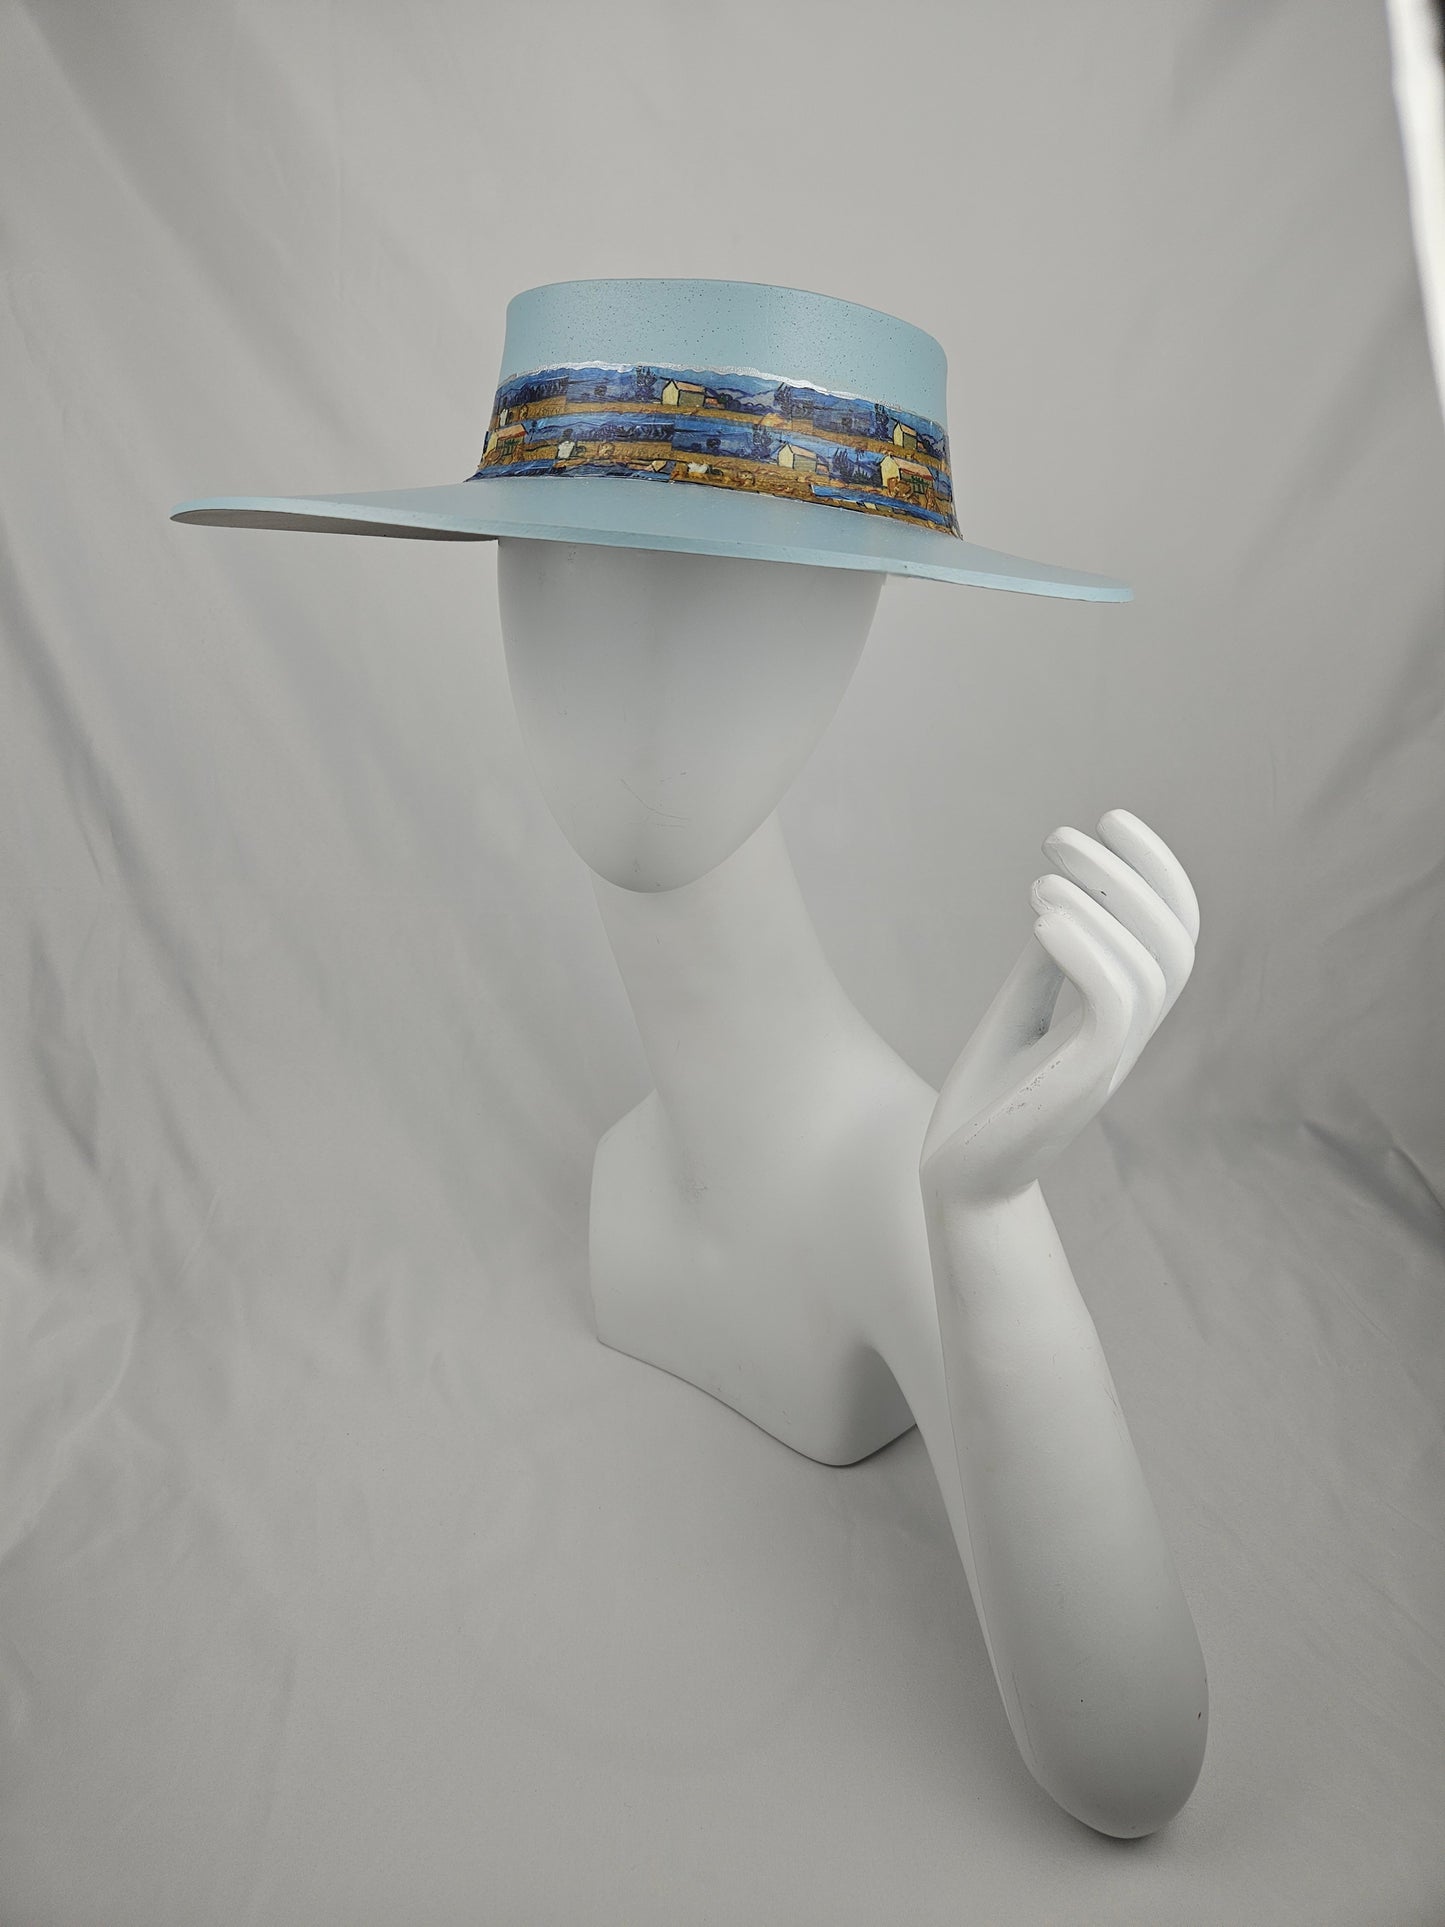 Soft Blue Audrey Sun Visor Hat with Monet Style Blue Band: 1950s, Walks, Brunch, Asian, Golf, Easter, Church, No Headache, Derby